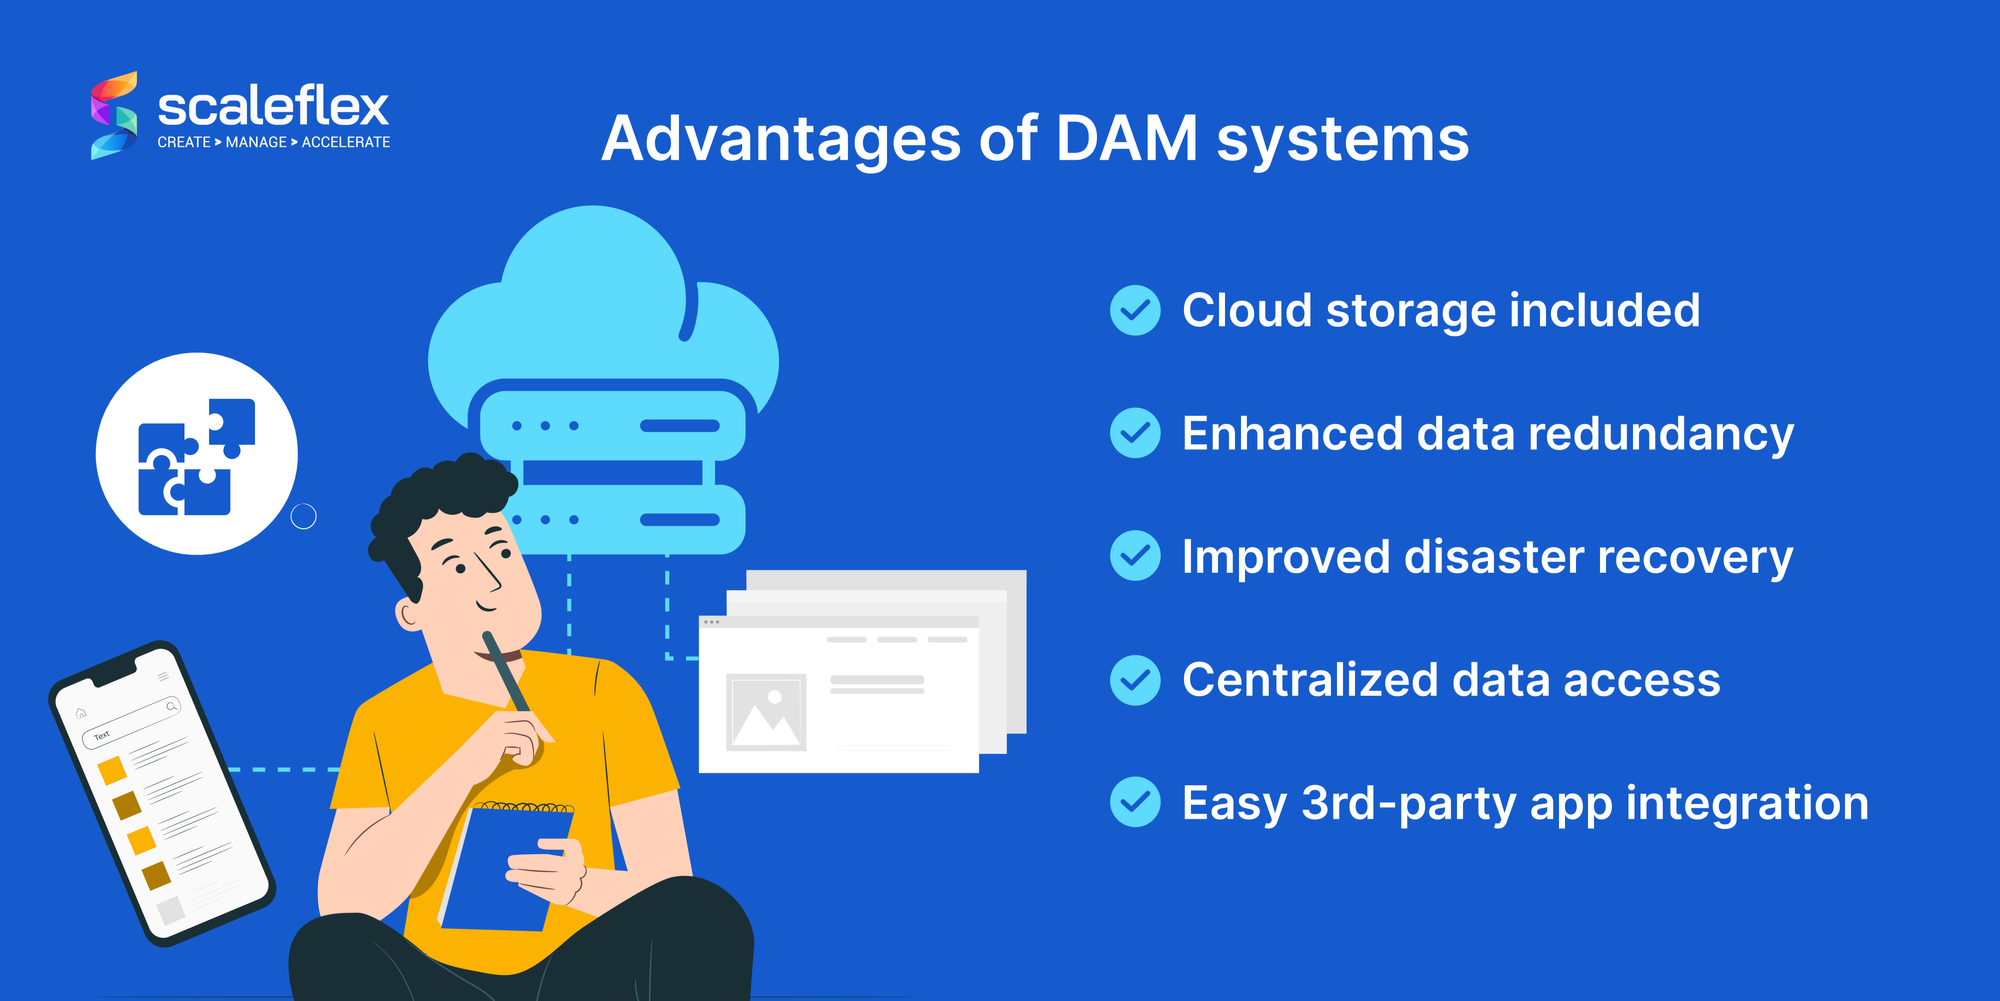 A succinct list of 5 key elements that place DAM as the more advantageous solution for data storage.